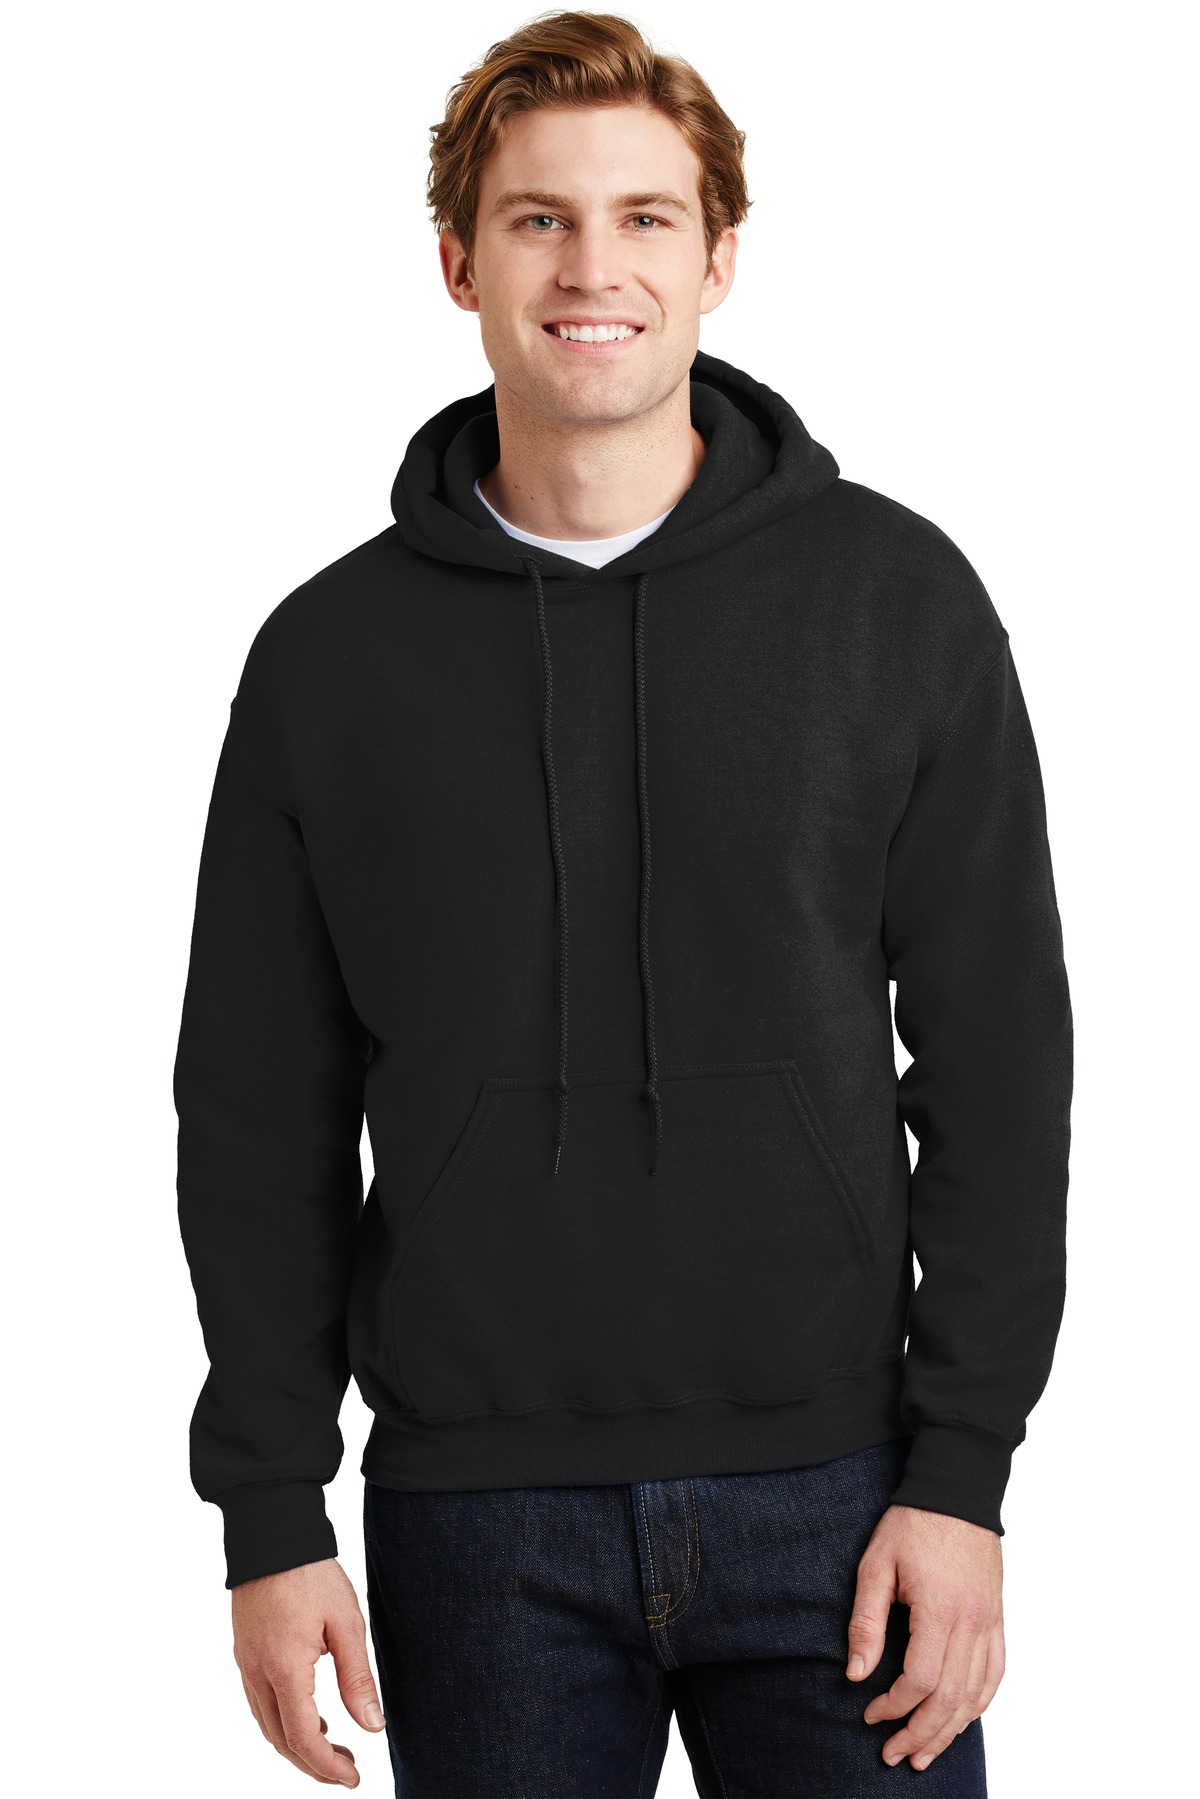 https://images.shirtspace.com/fullsize/qD%2BHVL0k9AopD4iOR%2FdHbg%3D%3D/58952/1221-gildan-g185-heavy-blend-hooded-sweatshirt-front-black.jpg